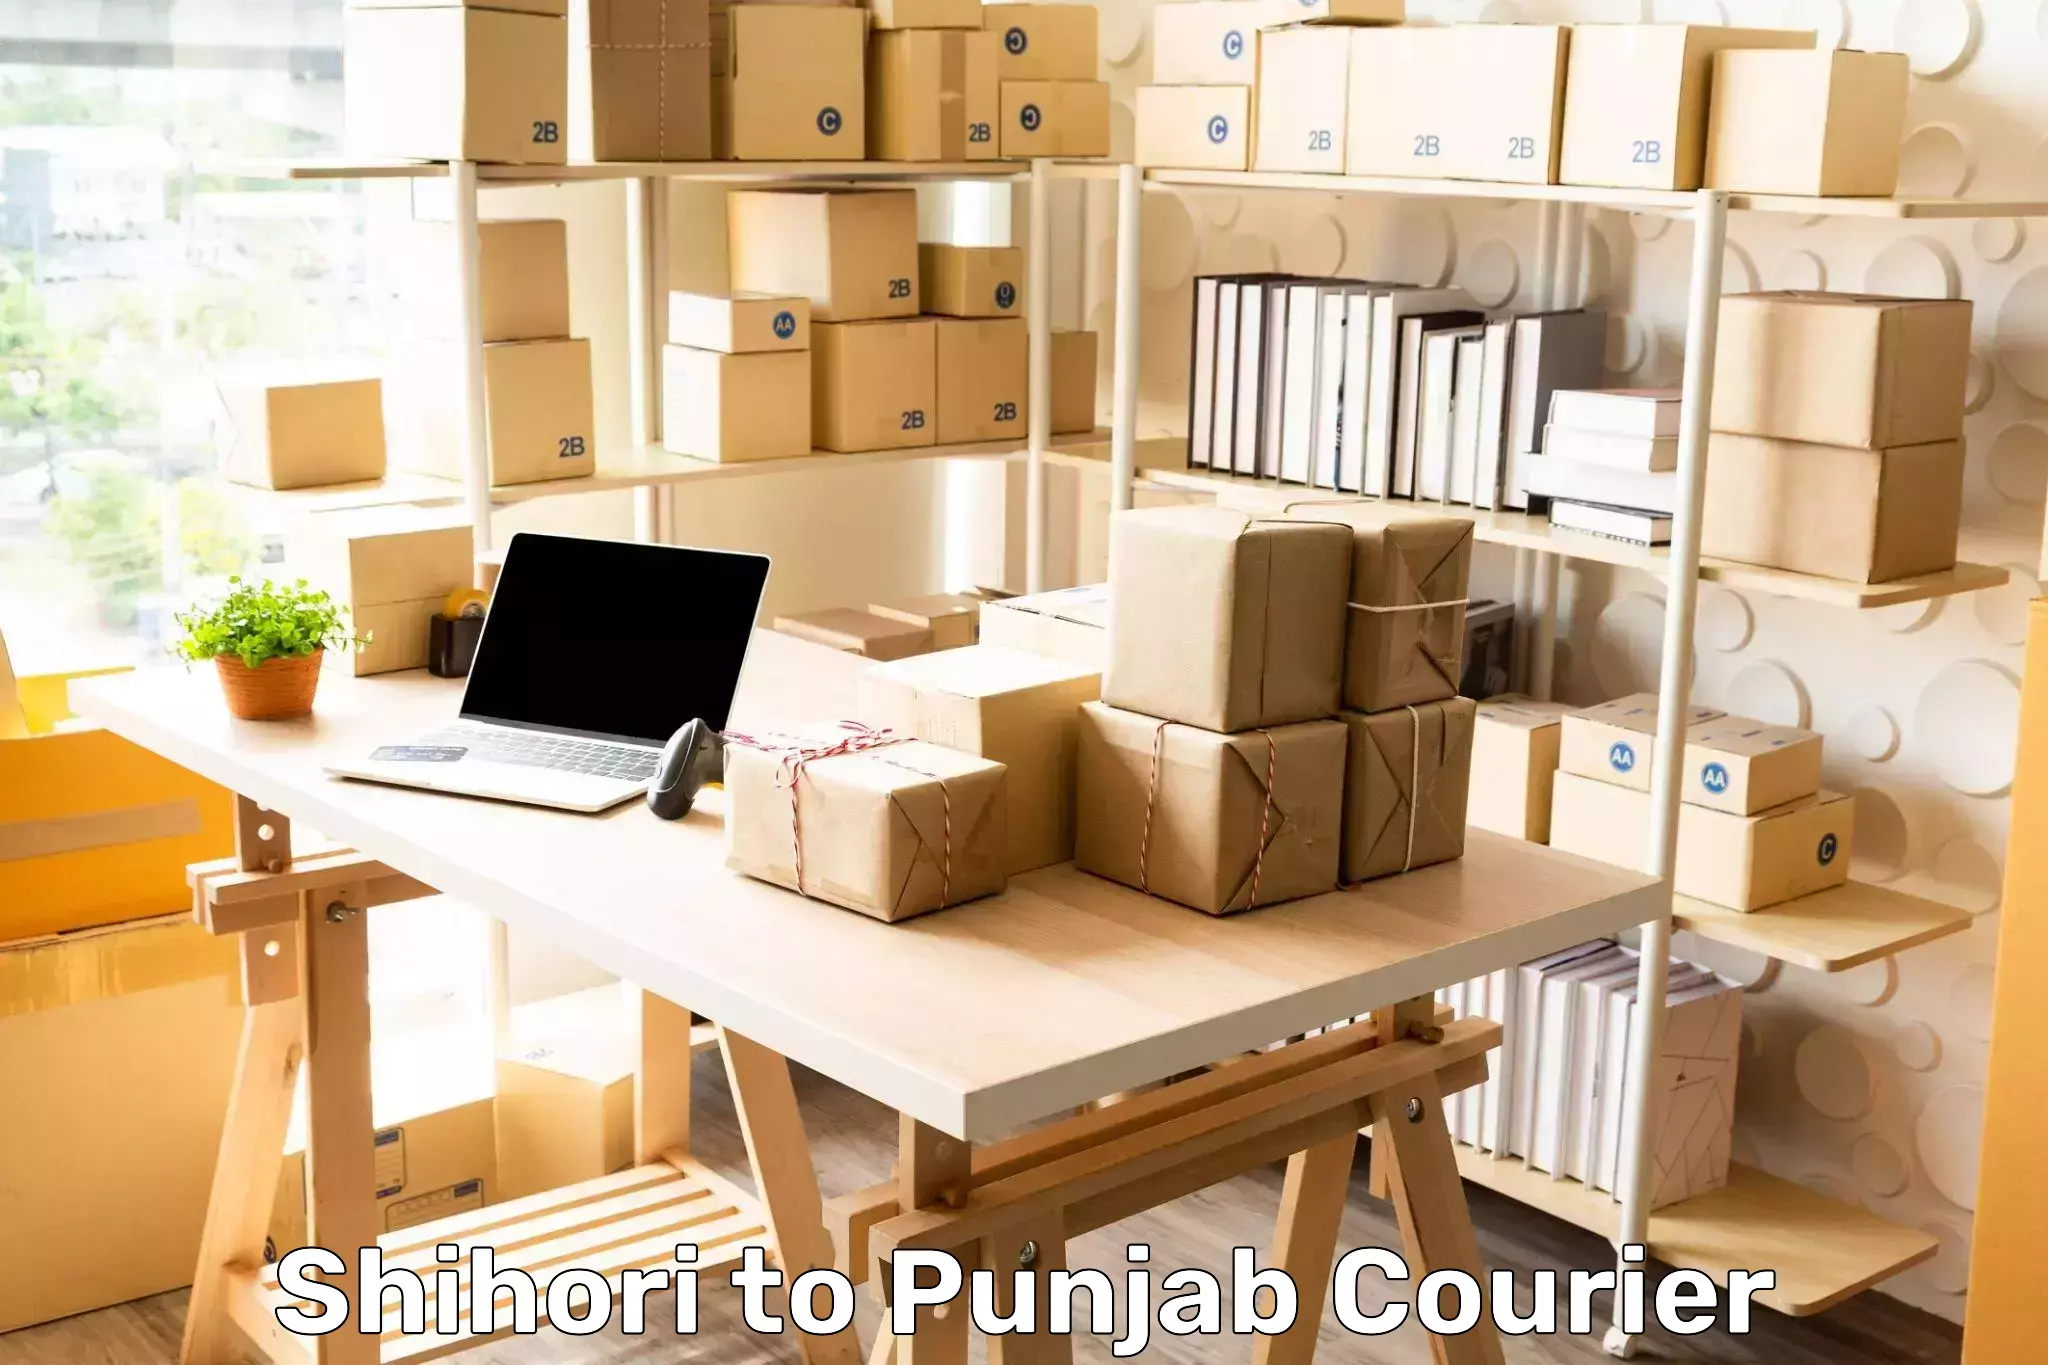 Cross-border shipping Shihori to Punjab